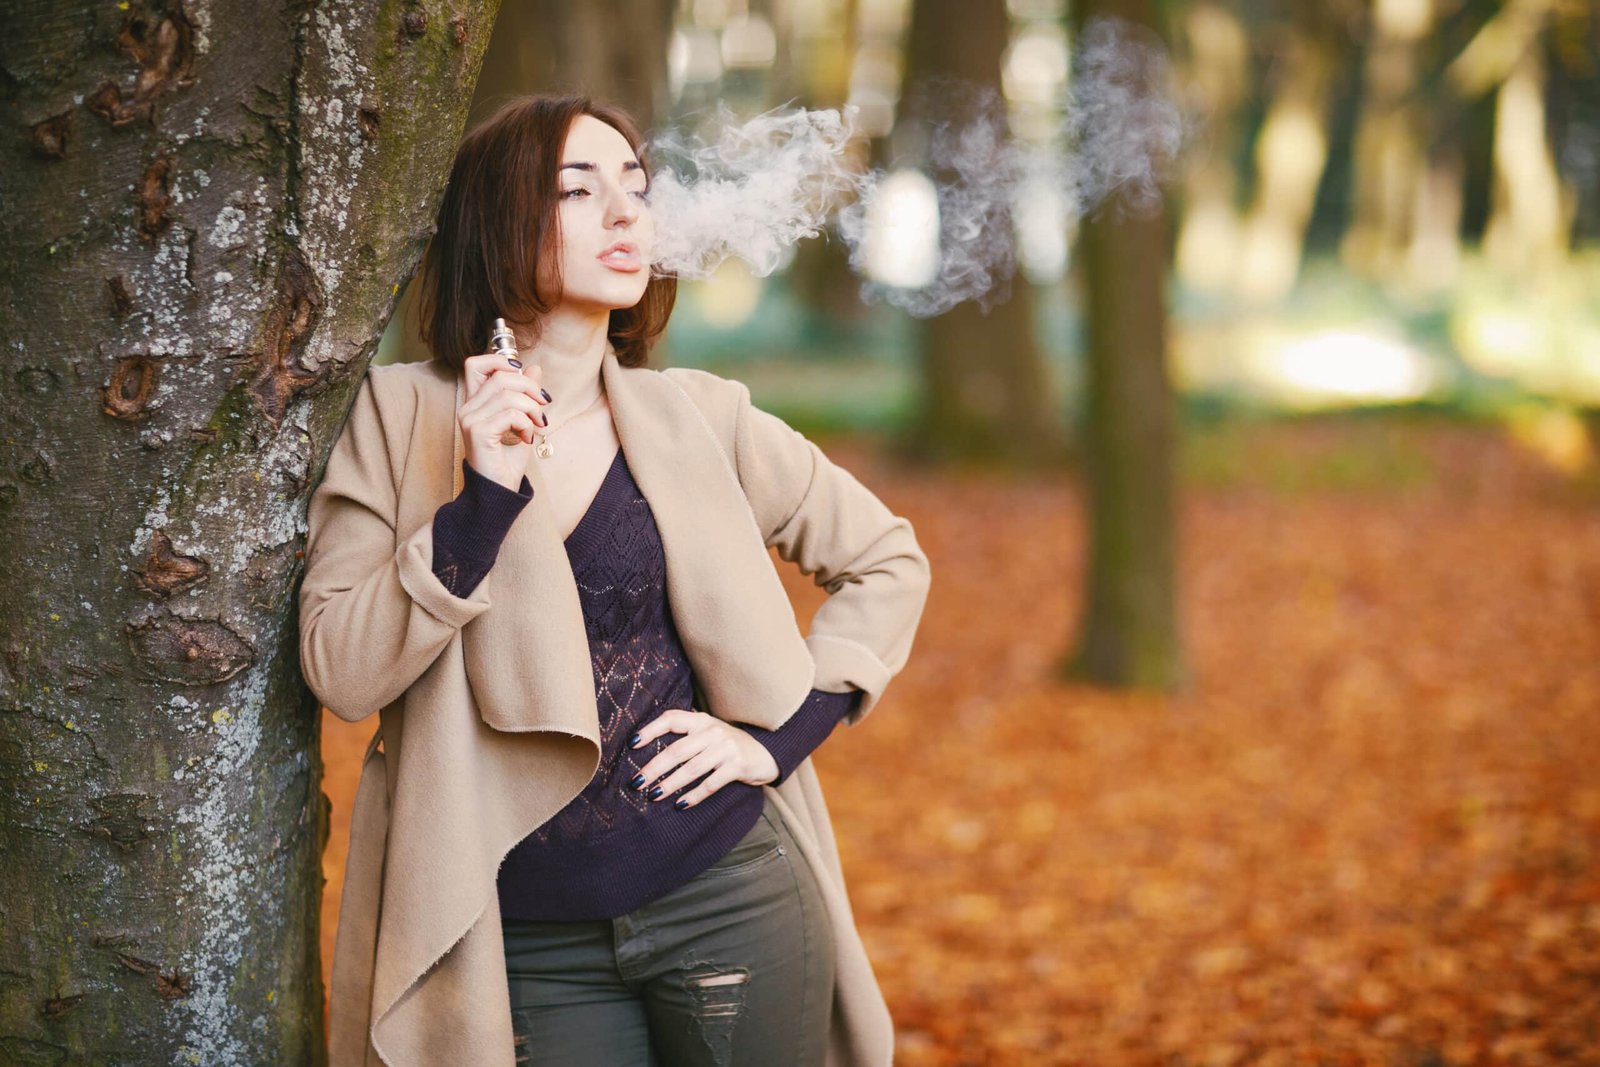 Smoke Healthily with Karma E Cigarette’s Tobacco-Free Solutions